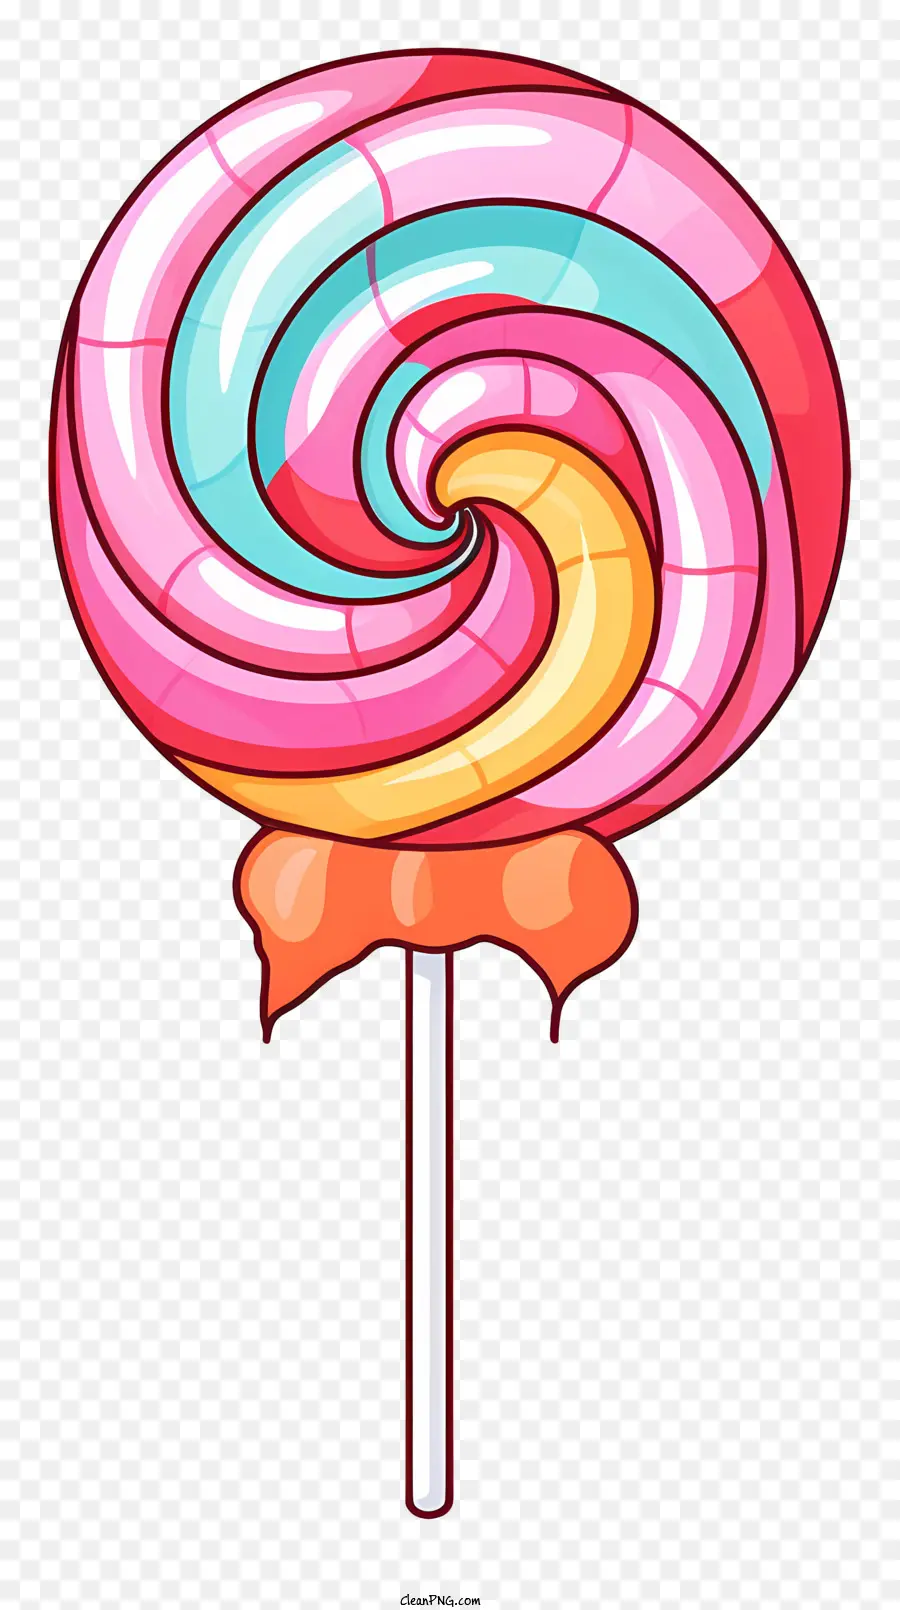 lollipop rainbow swirl colorful childhood nostalgia happiness